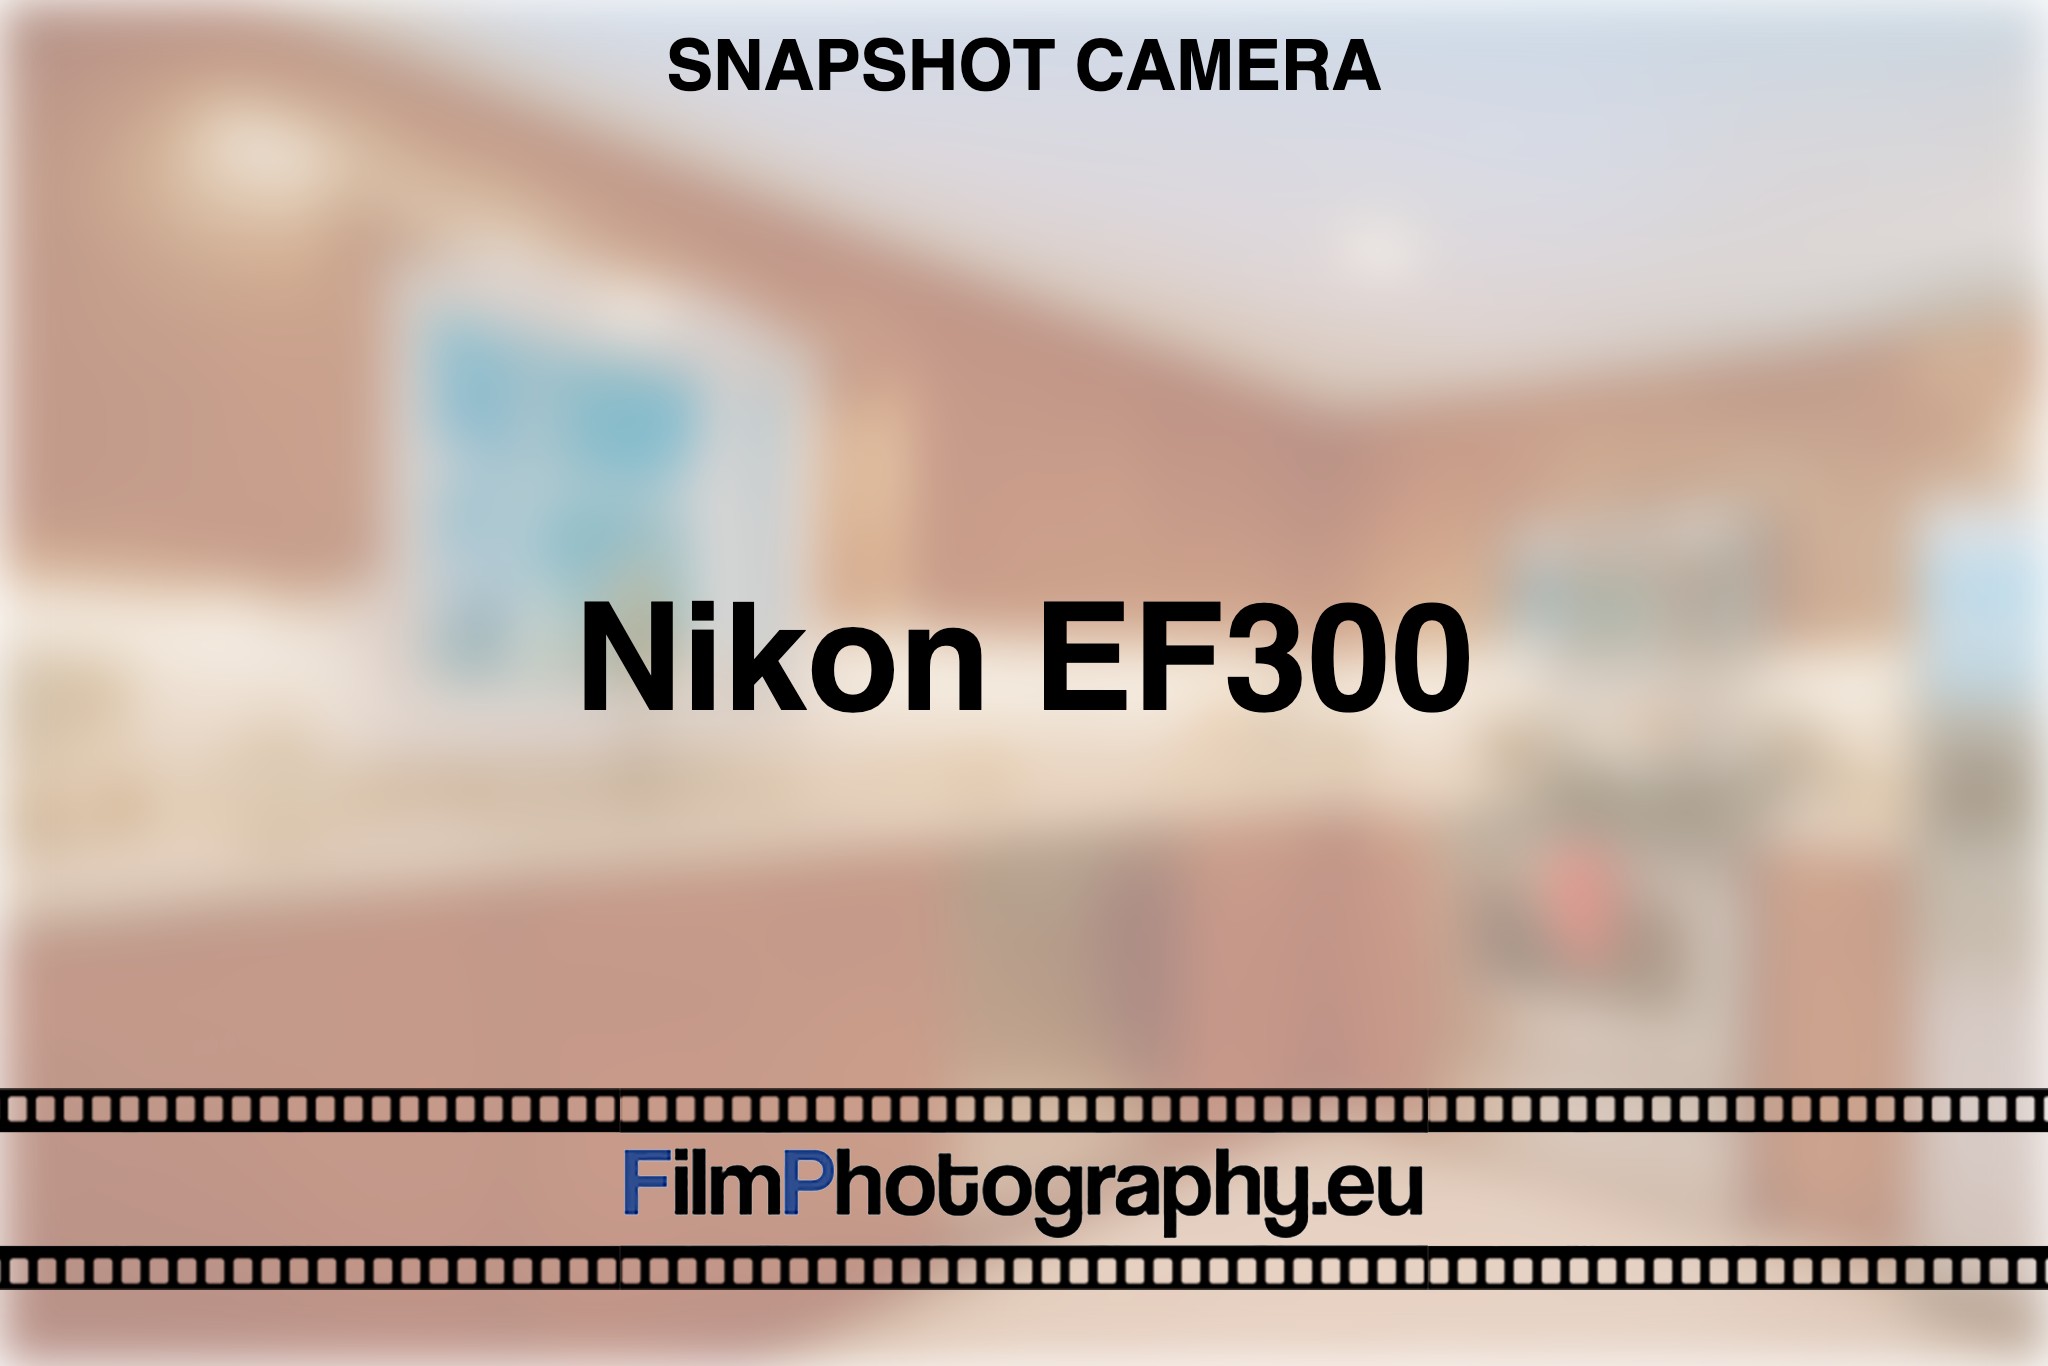 nikon-ef300-snapshot-camera-bnv